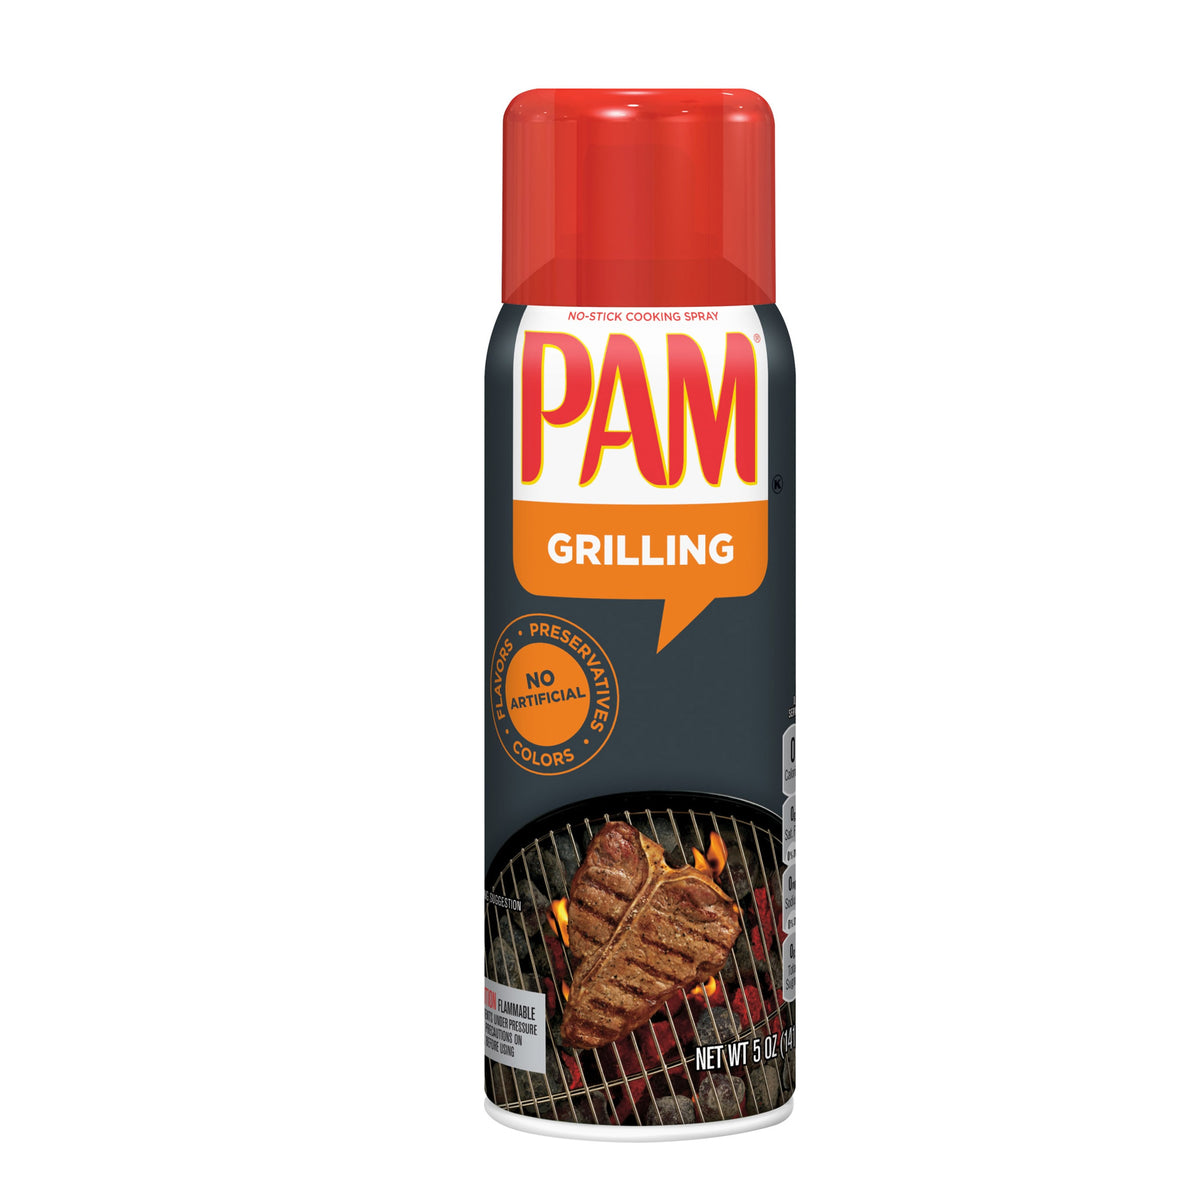 PAM3 - Pam Grilling Spray 141g